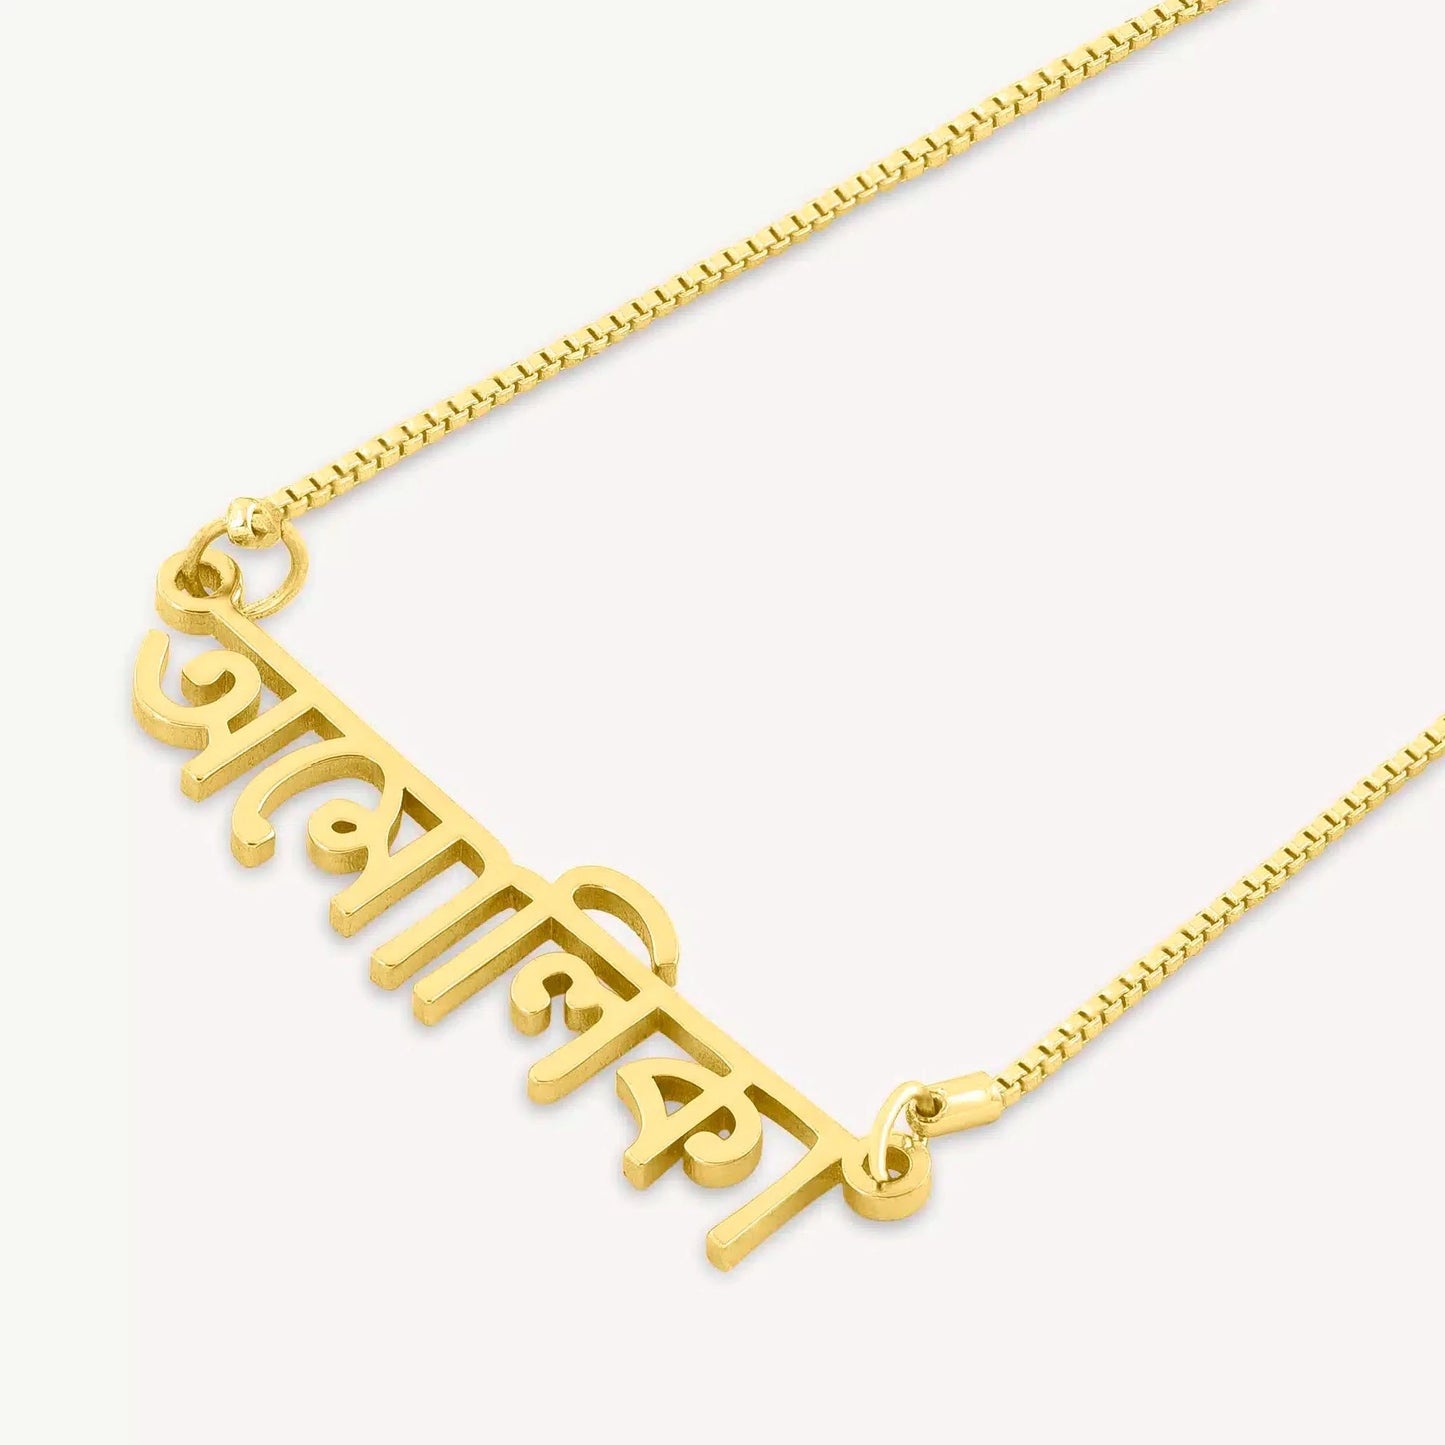 Bengali Name Necklace